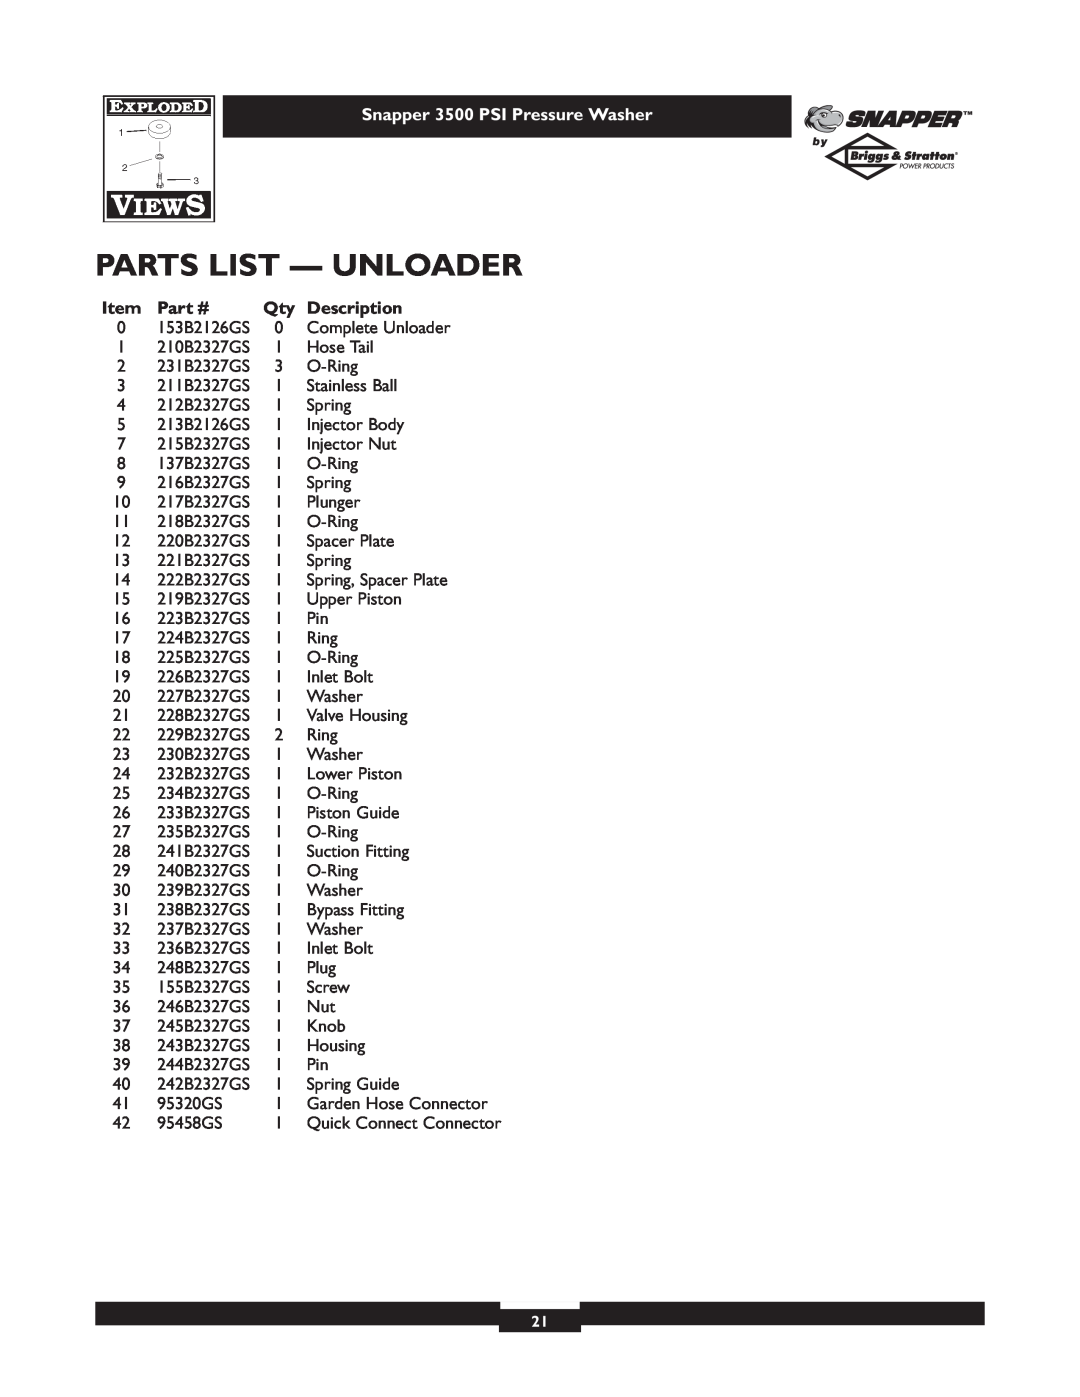 Briggs & Stratton 3500PSI Parts List - Unloader, Snapper 3500 PSI Pressure Washer, Description, Quick Connect Connector 